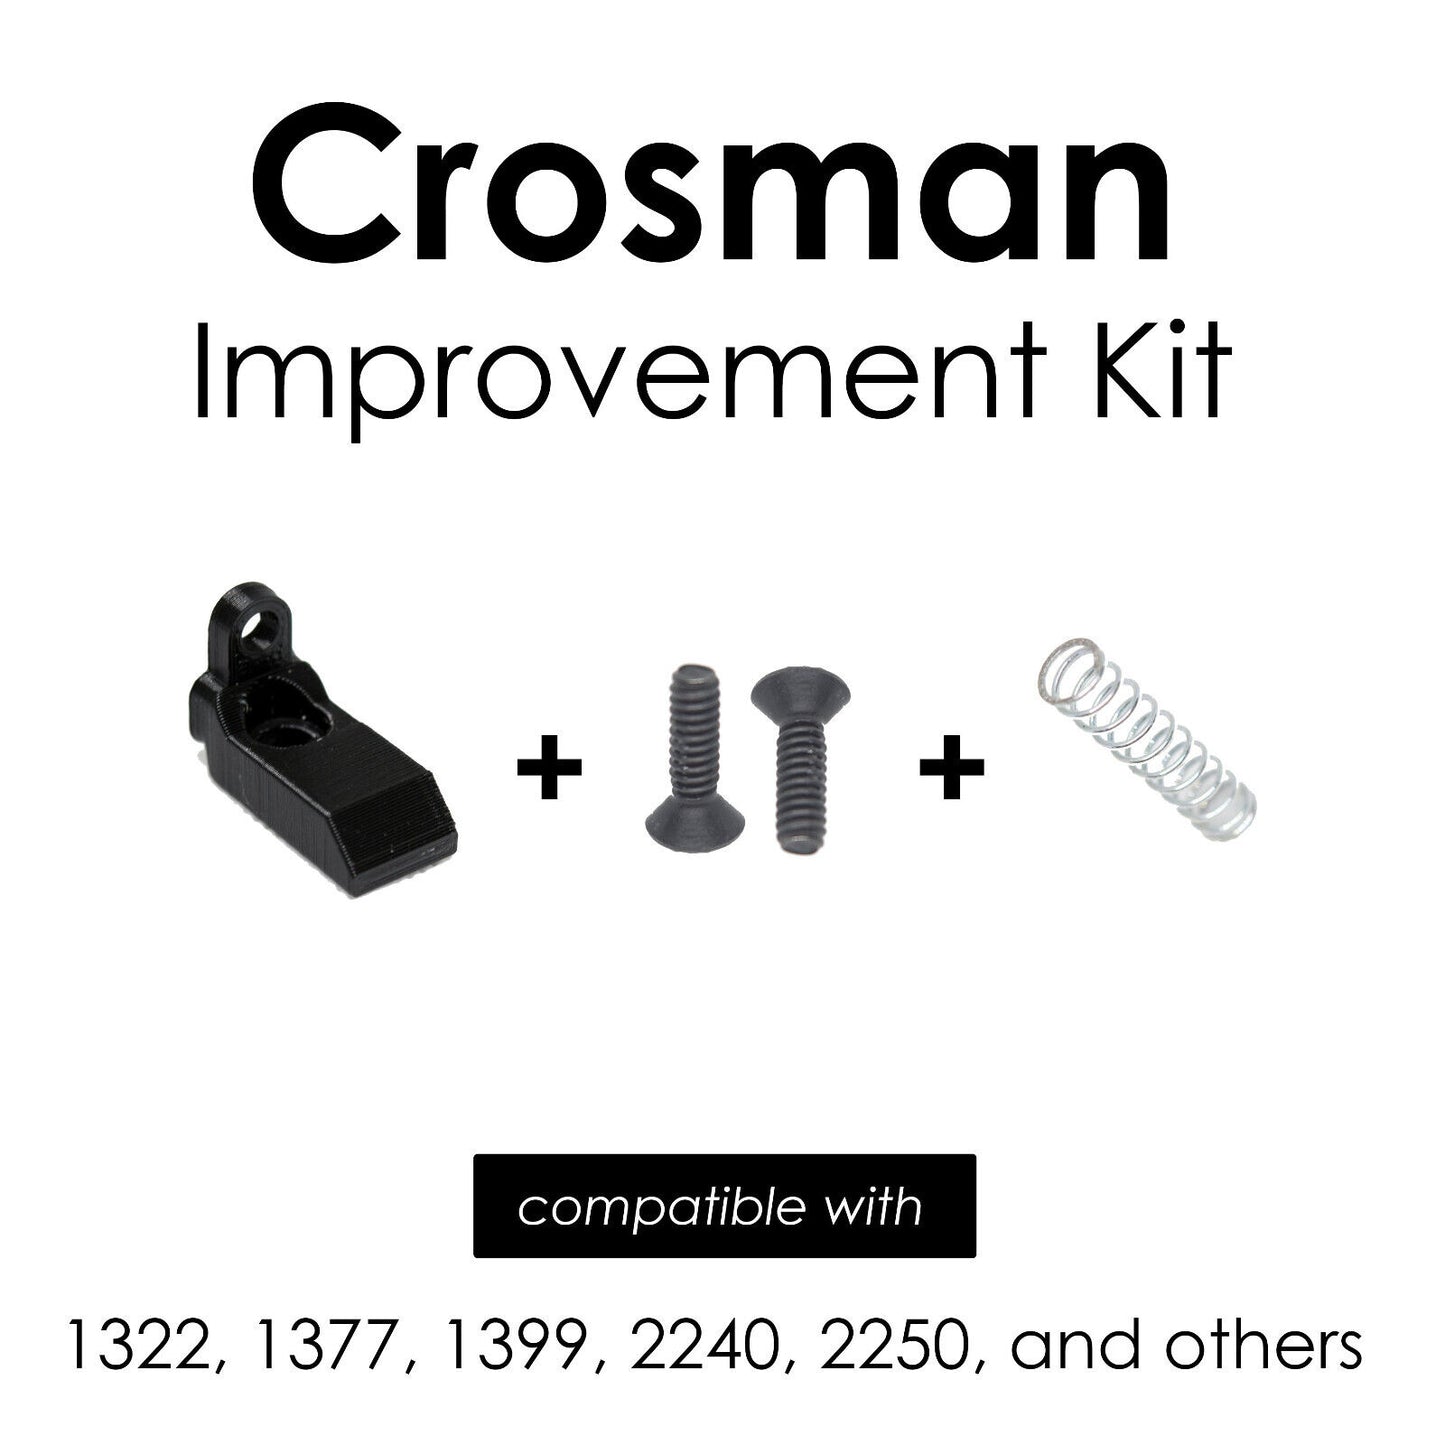 Crosman Improvement Kit (Sight, Screws, Spring) for 1322, 2240, 2250, 1377, etc.